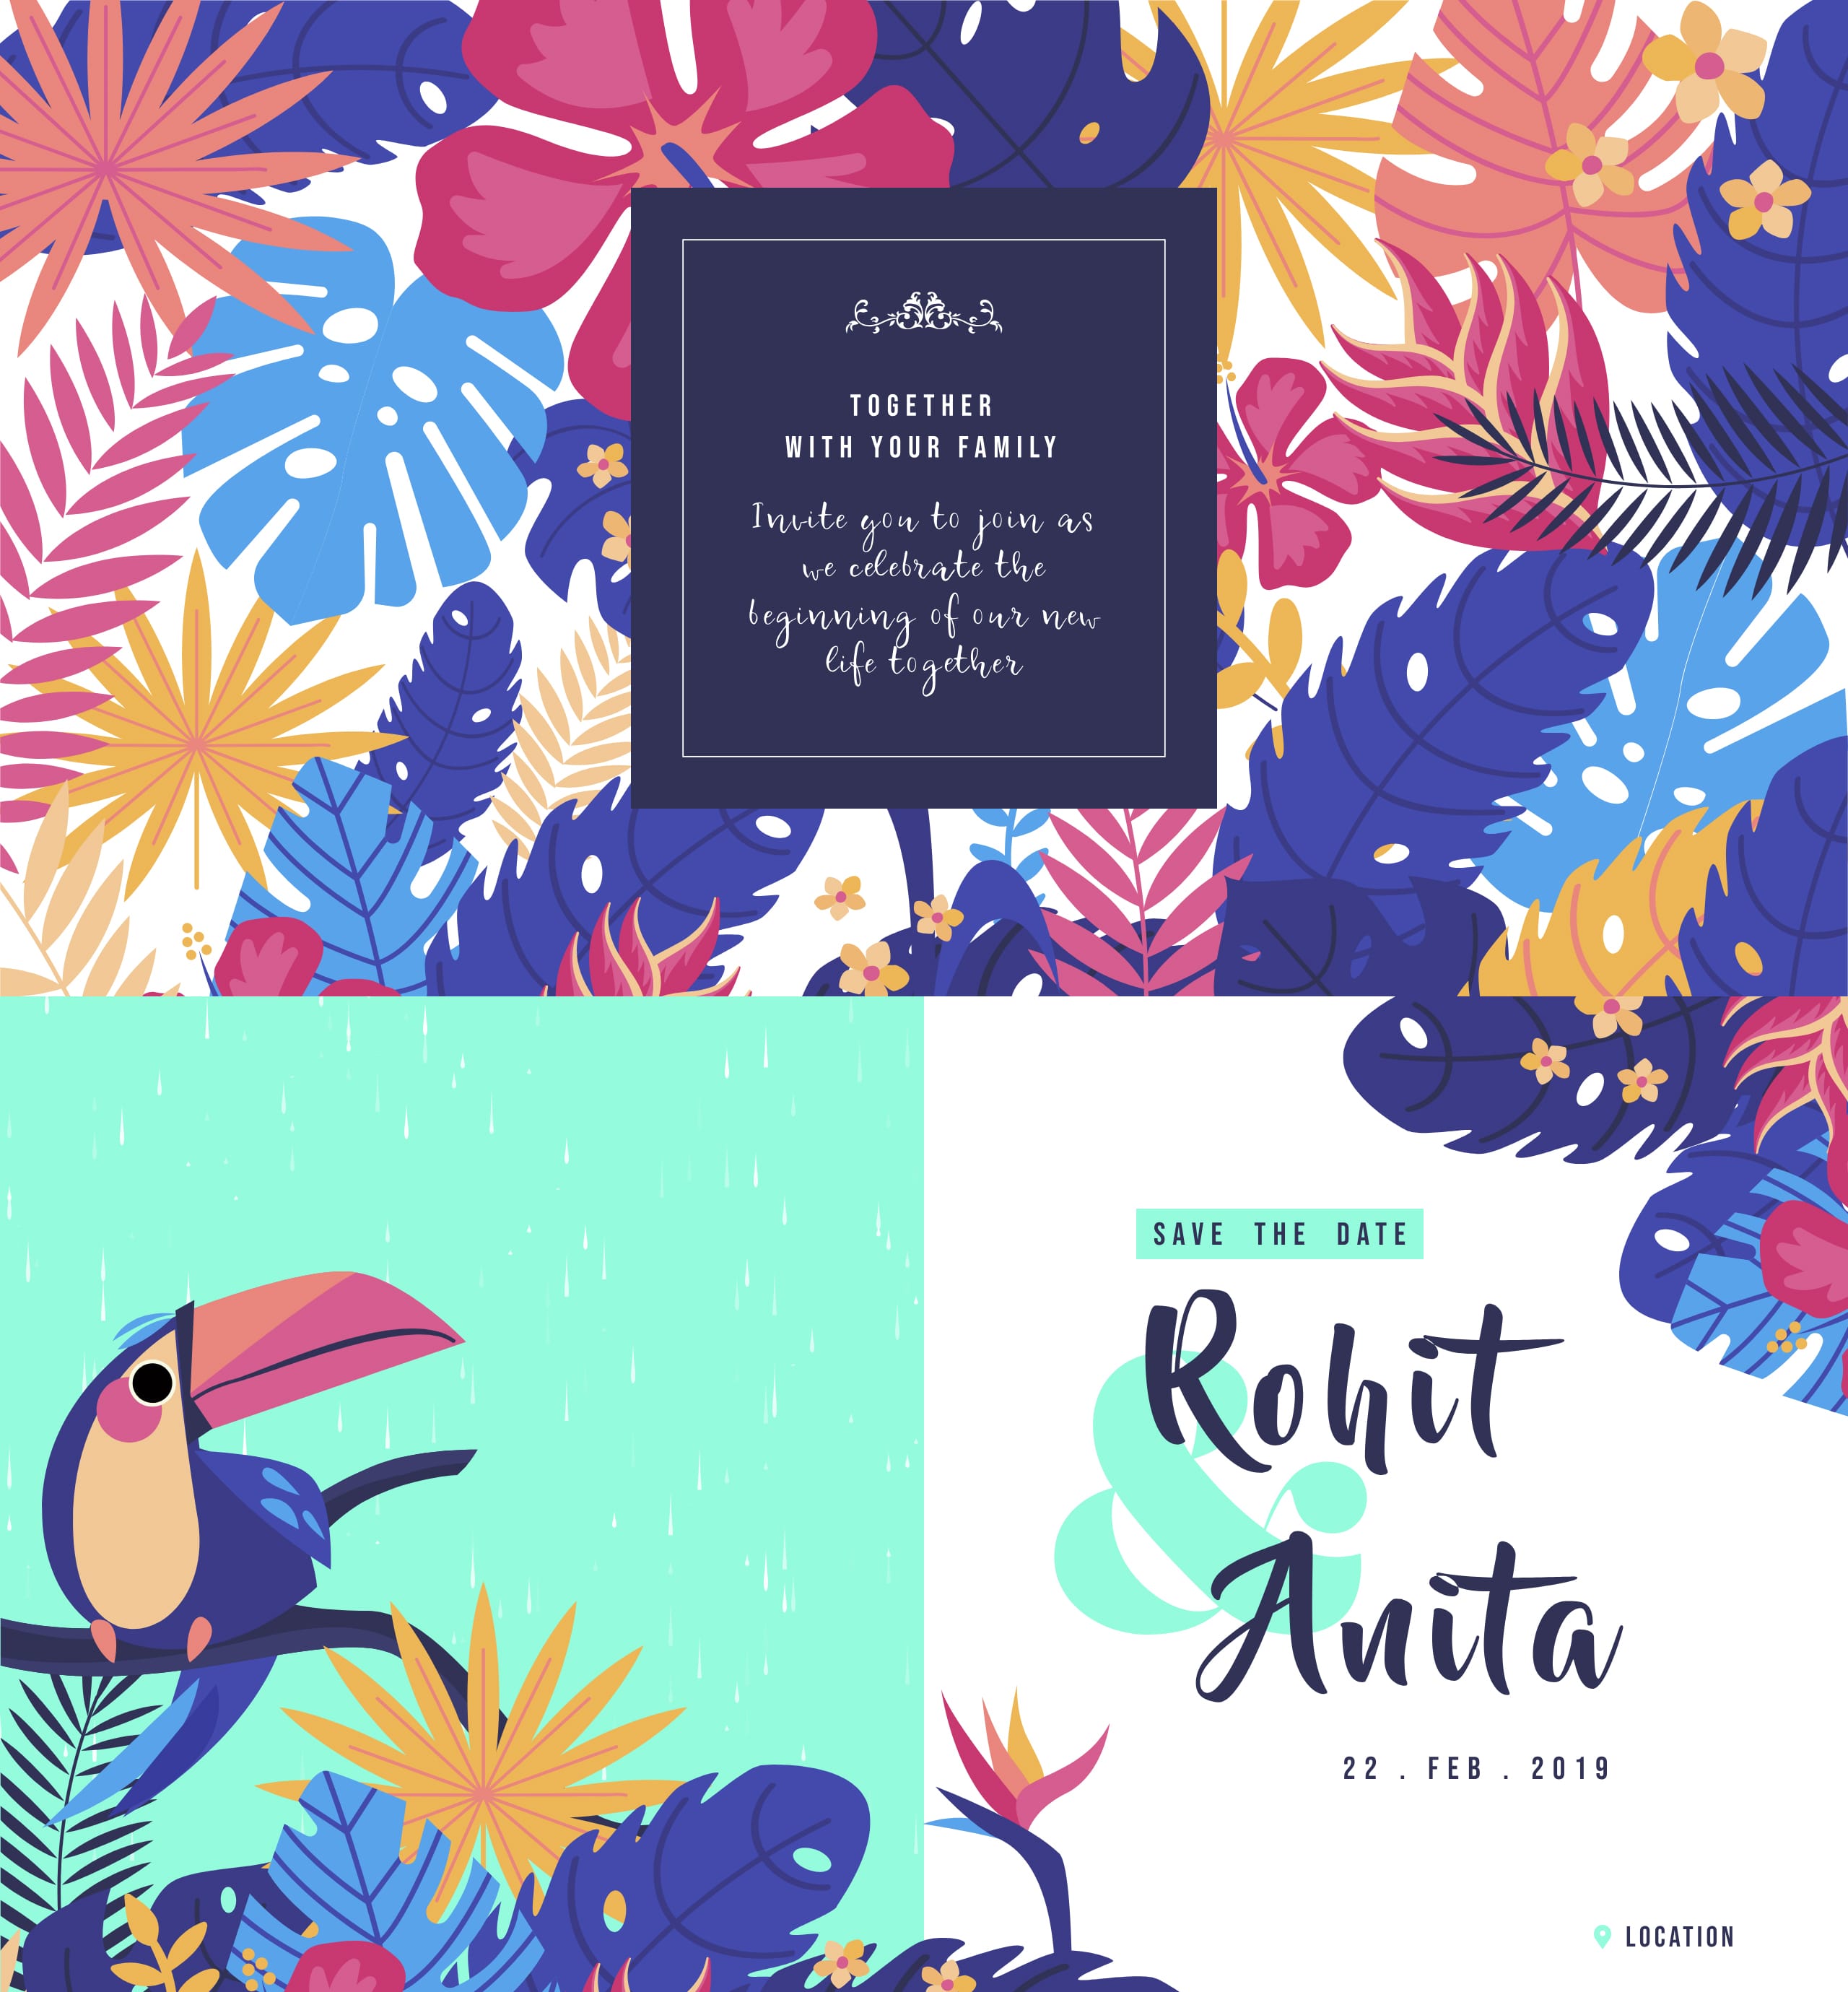 Rohit & Anita – Save The Date Website Screenshot